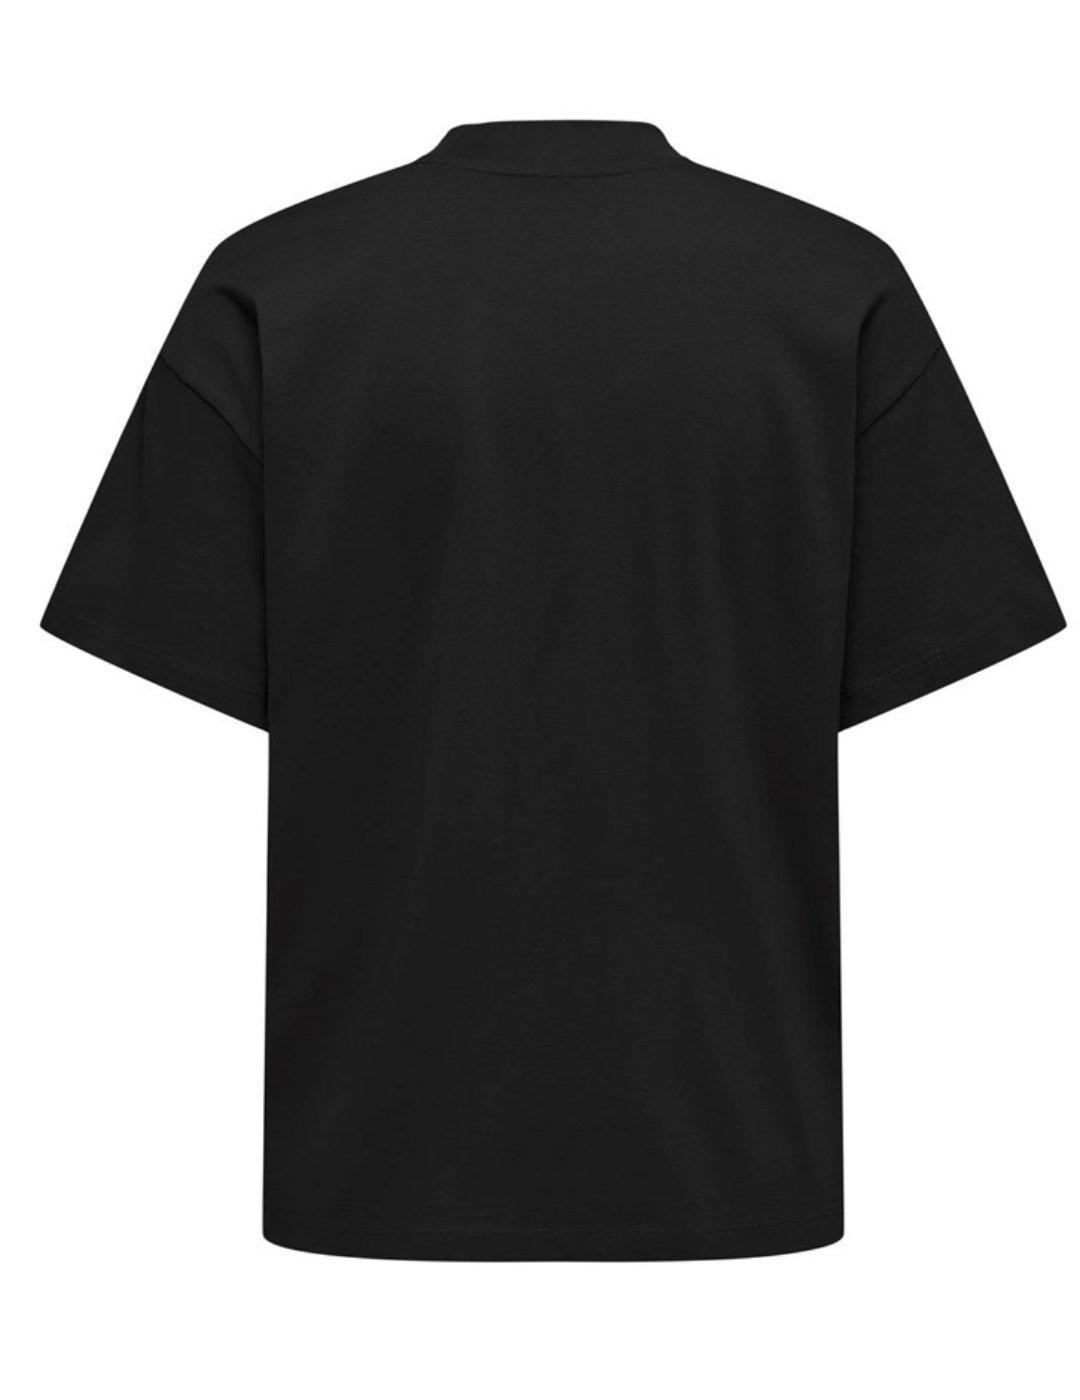 Camiseta Only Laura negro holgada manga corta para mujer